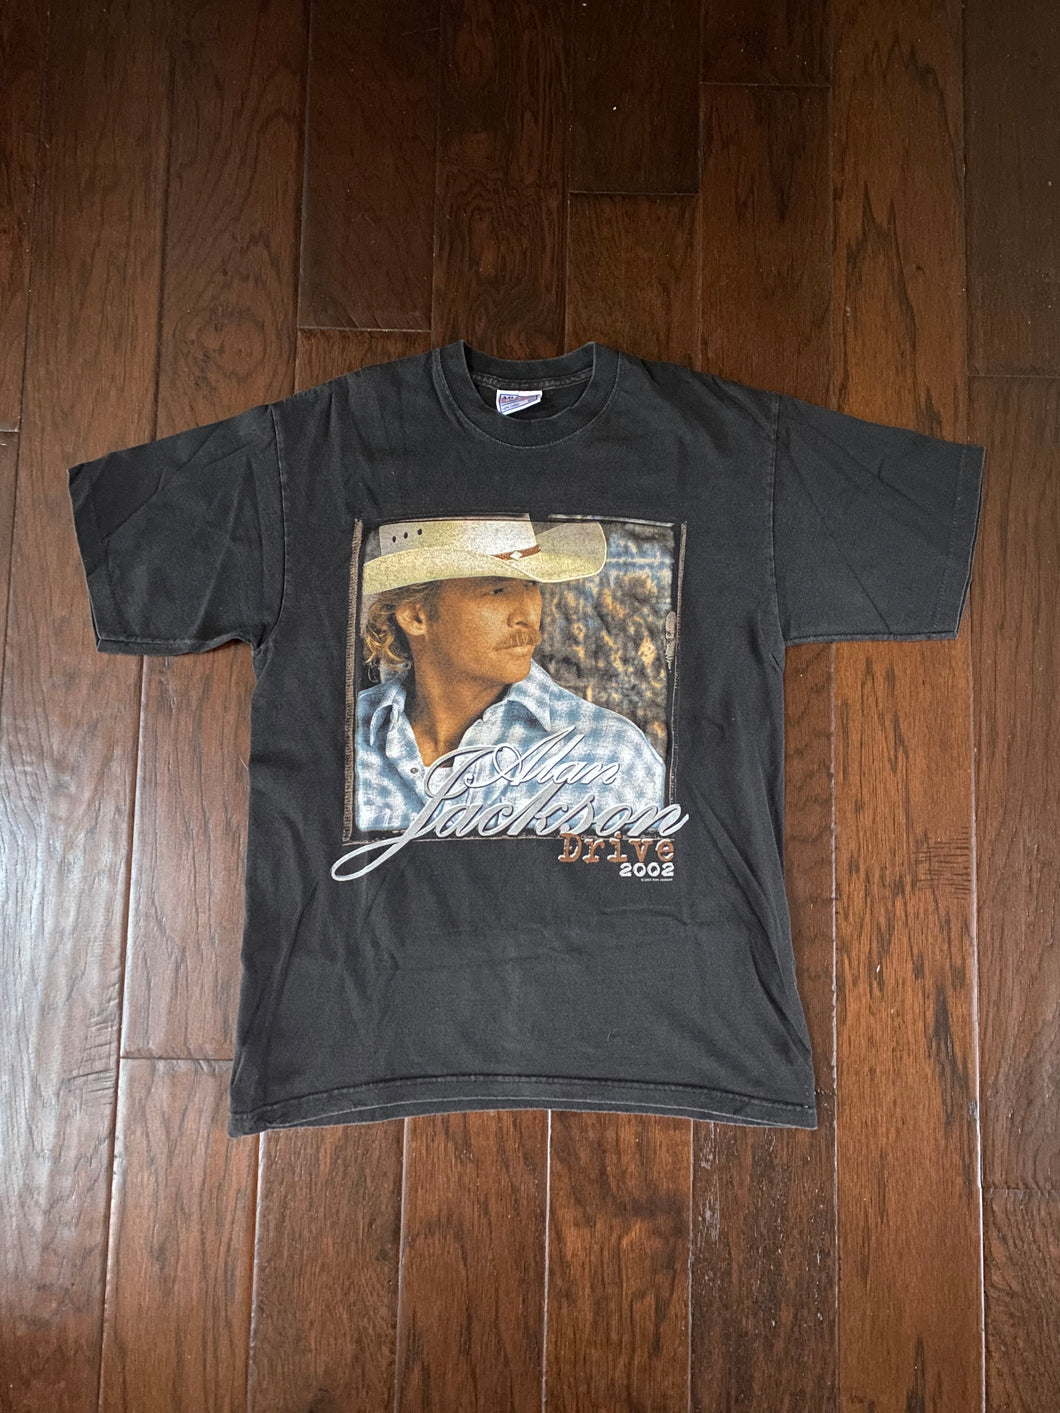 Alan Jackson 2002 “Drive Tour” Vintage Distressed T-shirt